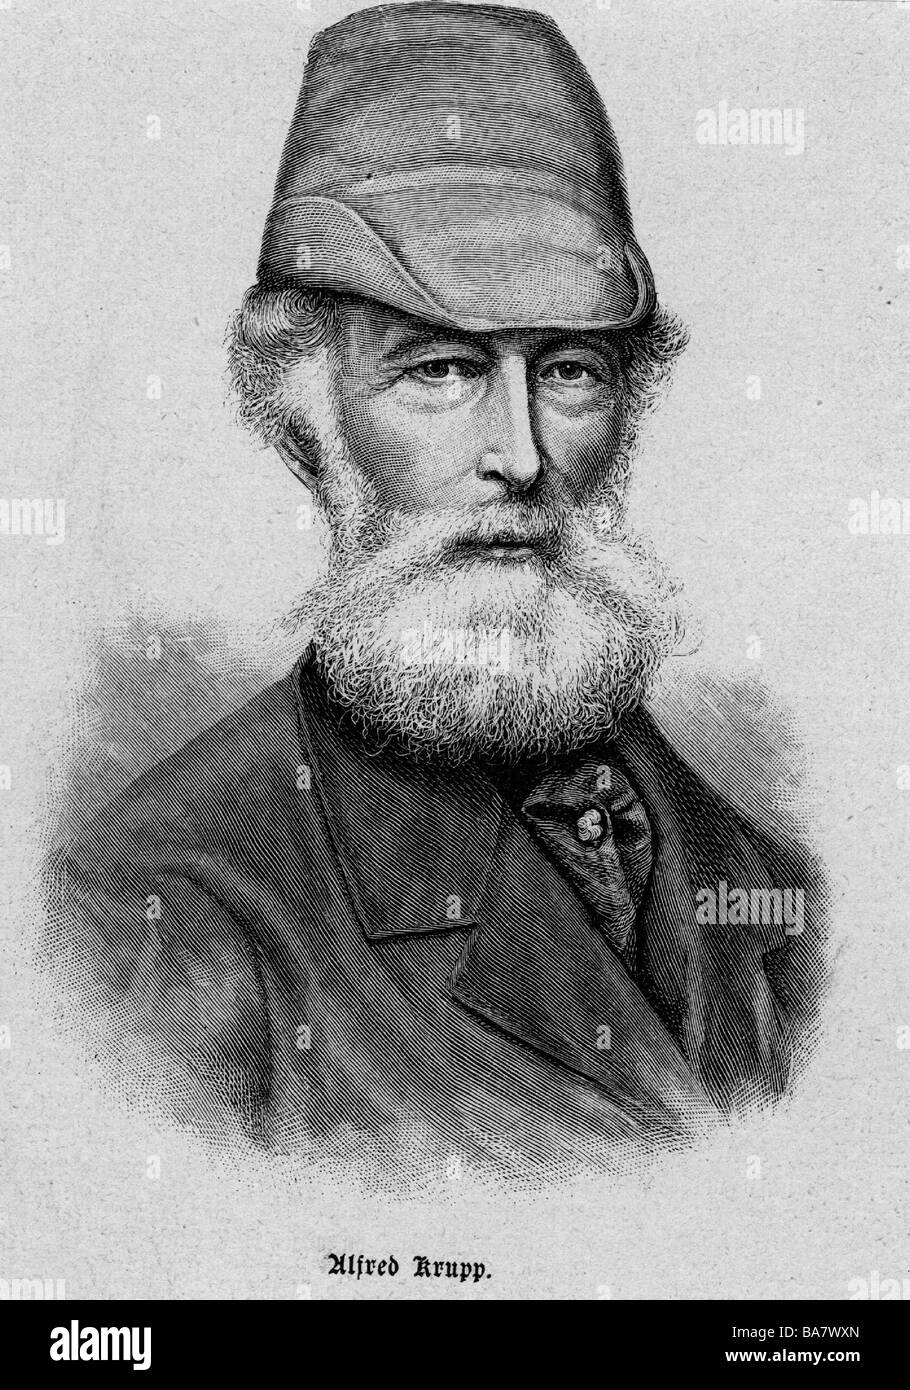 Krupp, Alfred, 11.4.1812 - 14 7.1887, German industrialist, portrait, wood engraving, Stock Photo